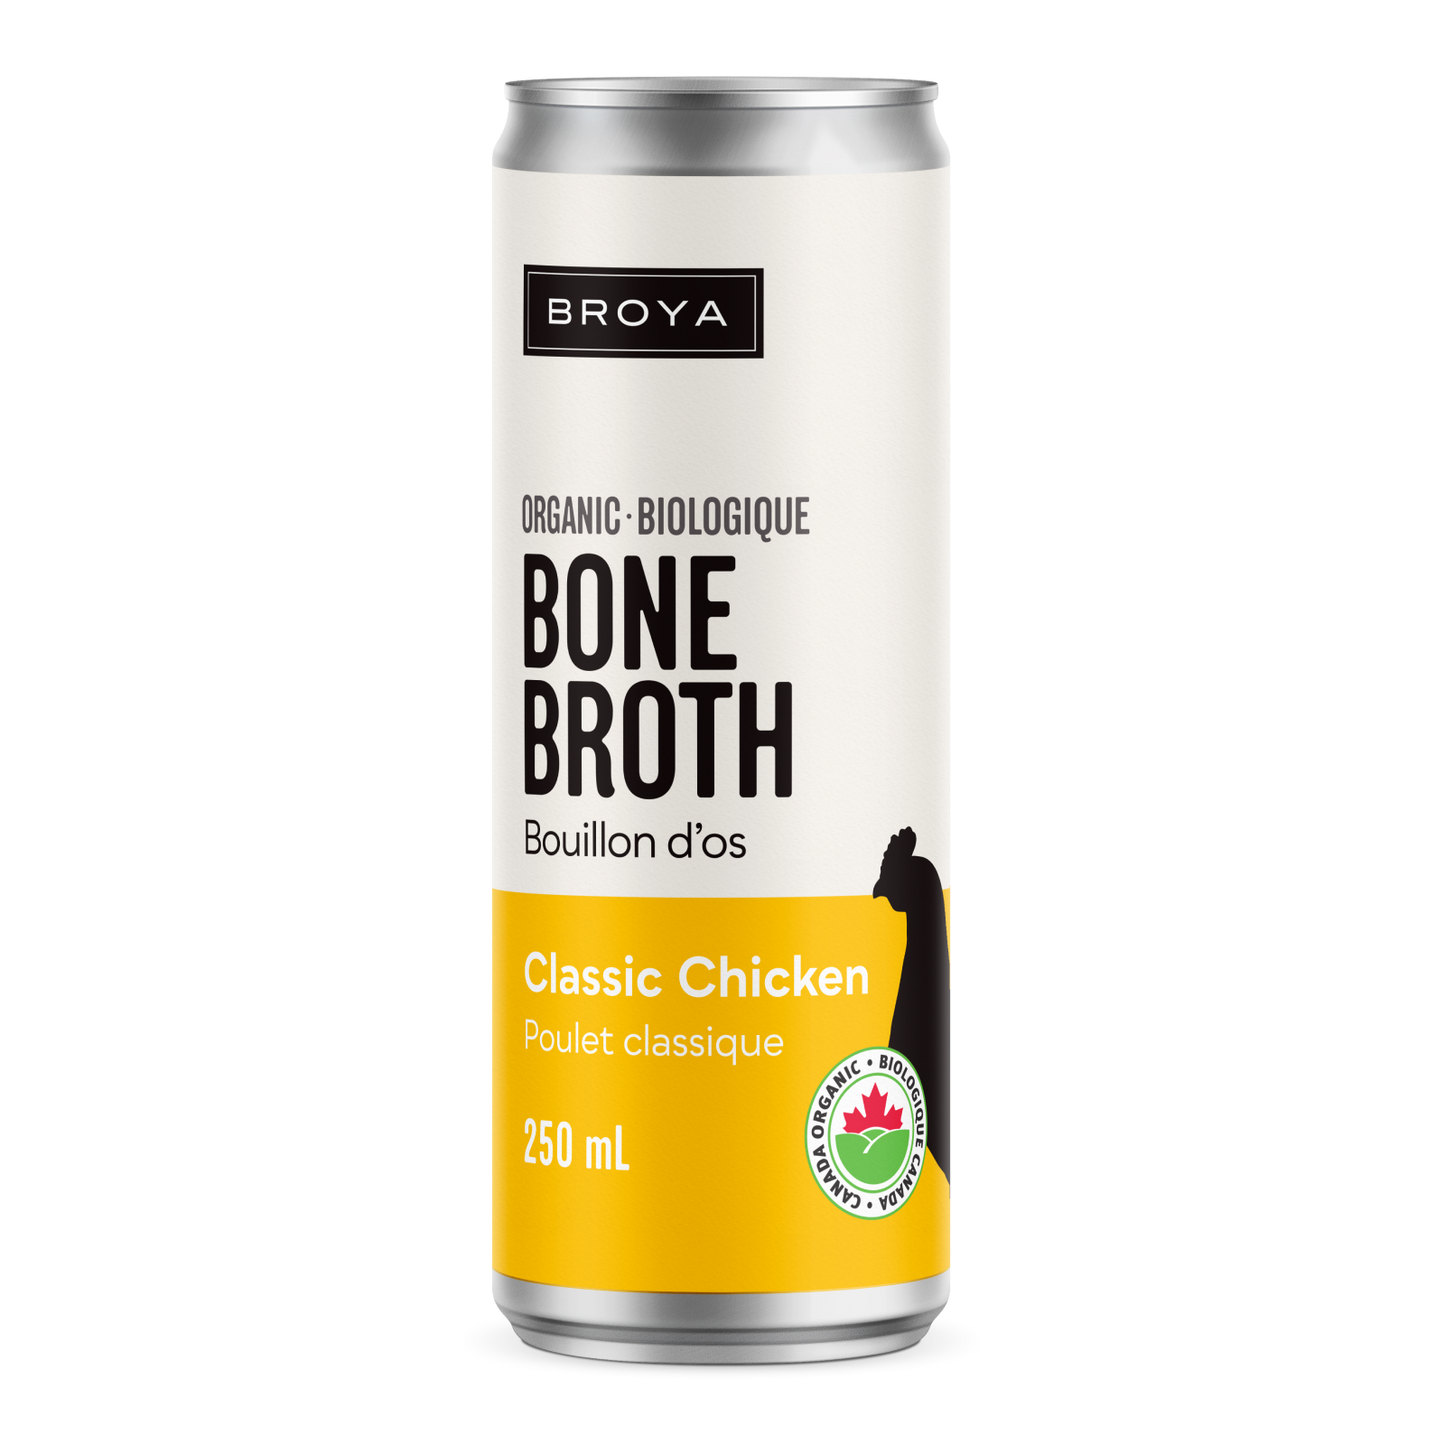 Classic Chicken Bone Broth